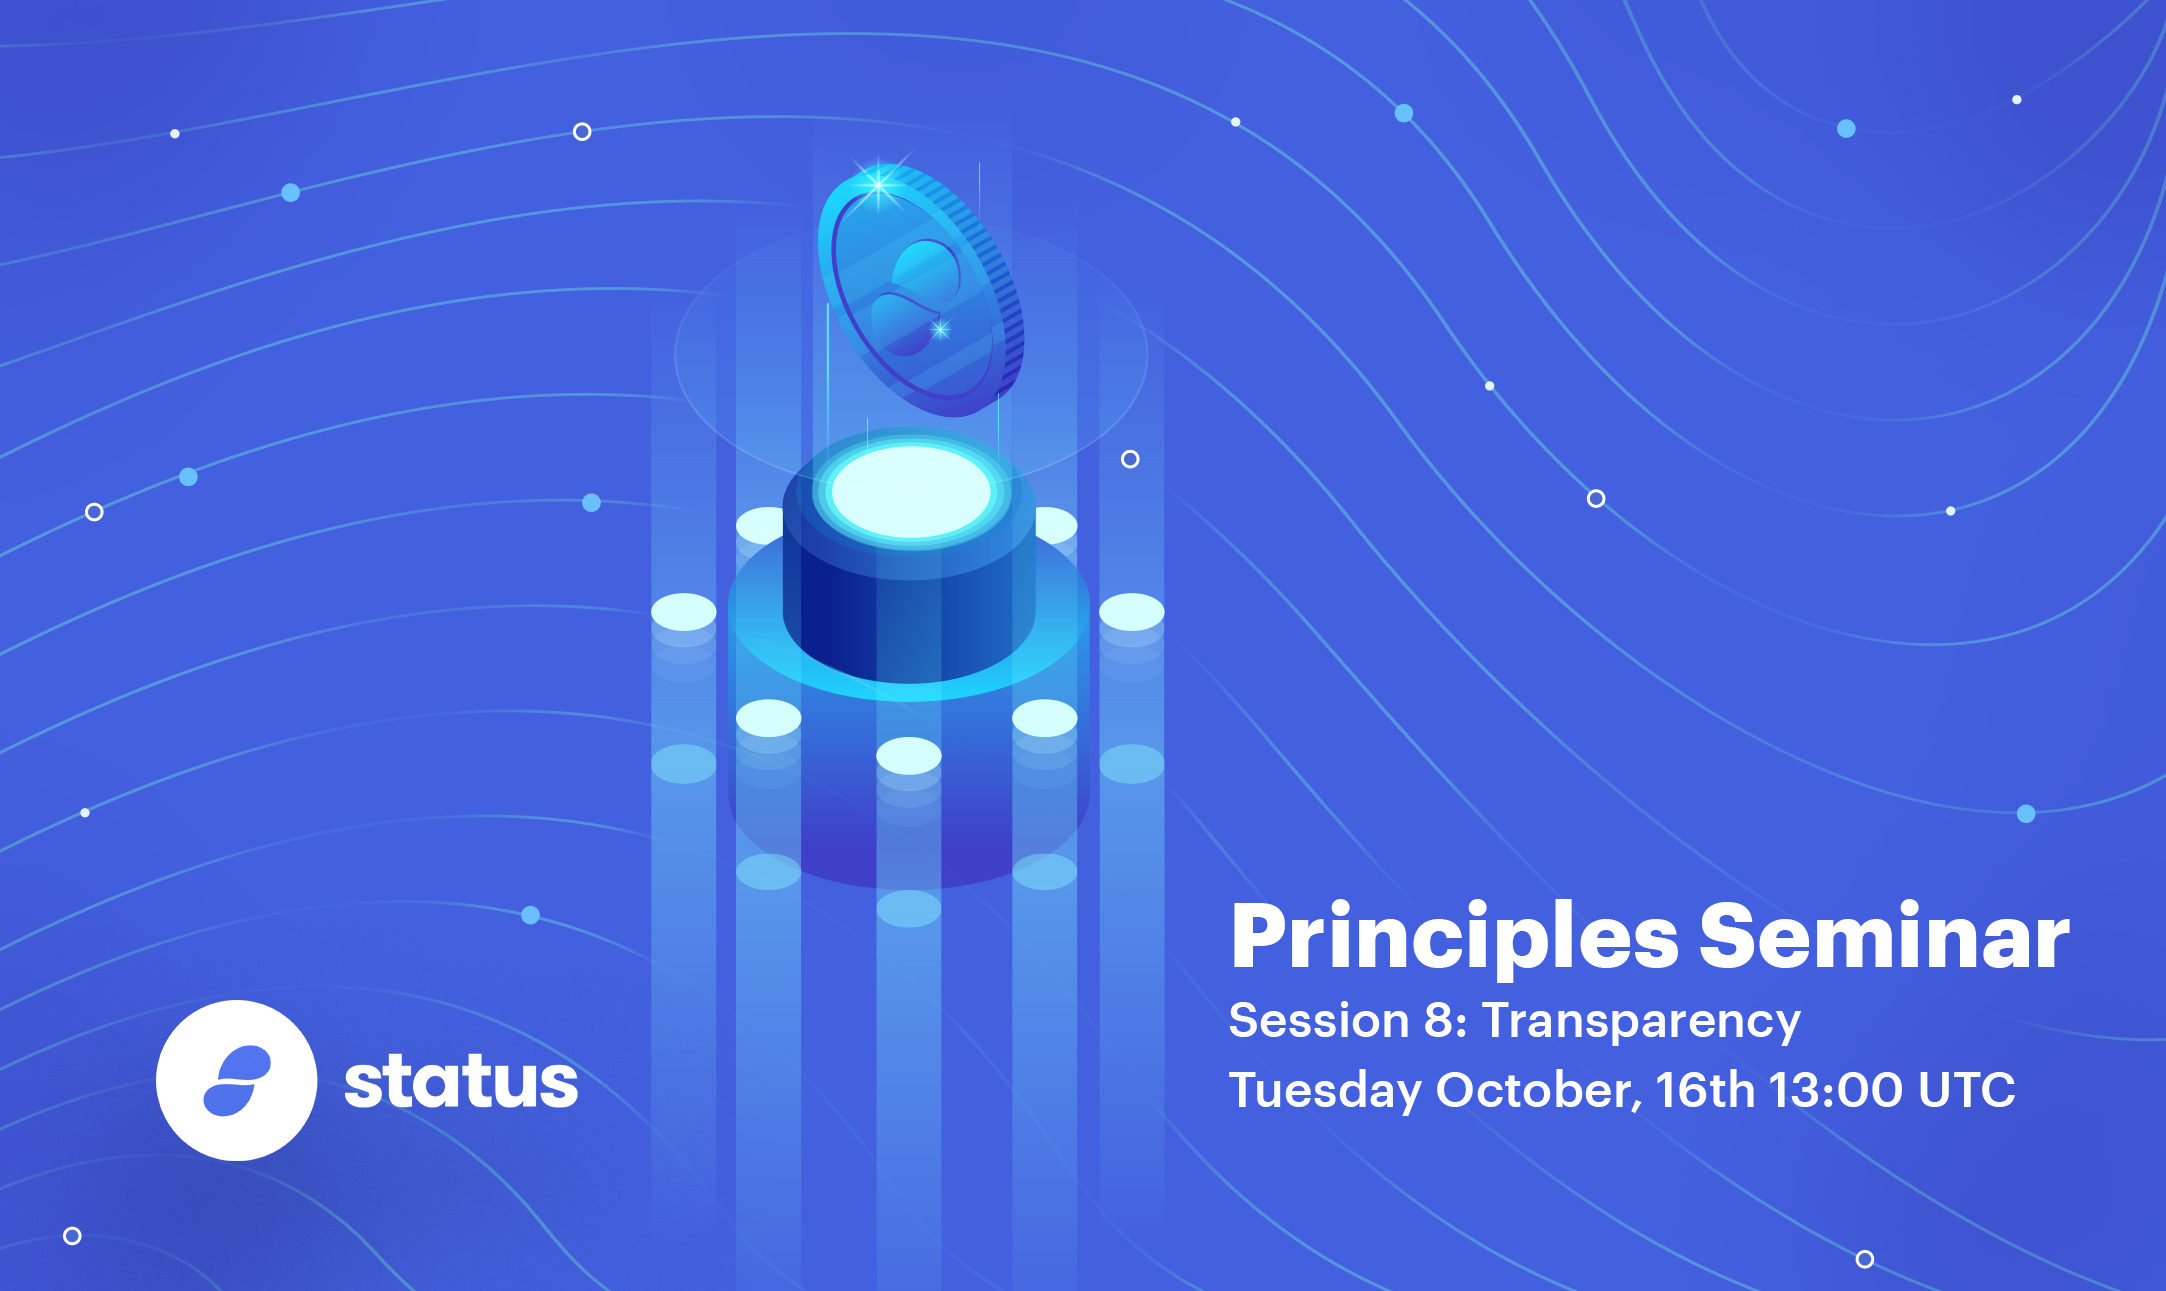 Principles Seminar - Session 8: Transparency